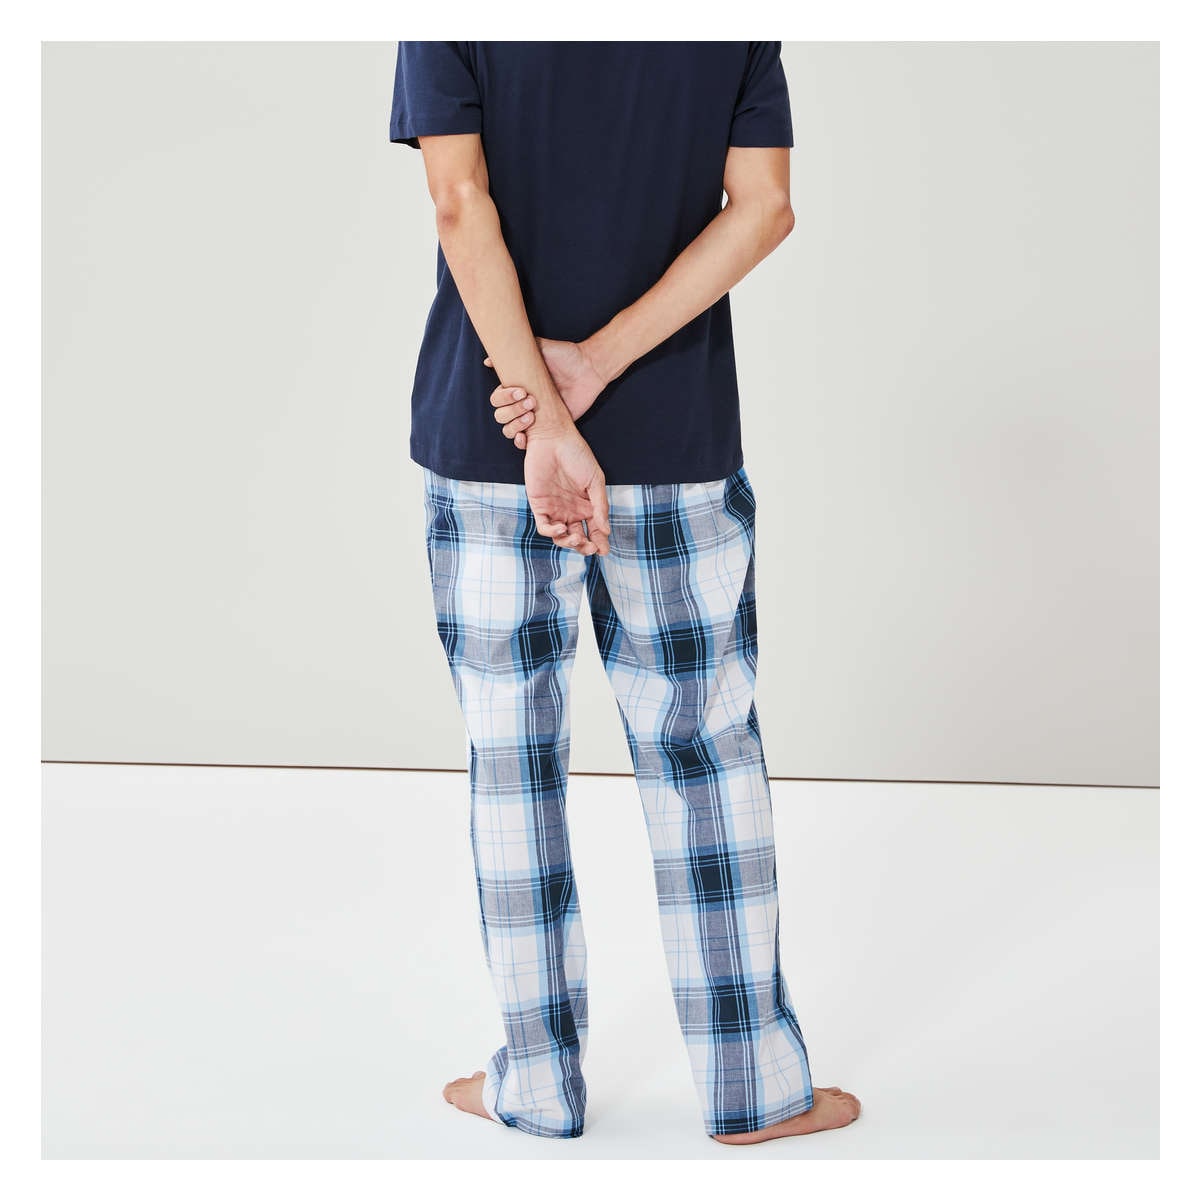 Men's Cotton Pajama Pant in Dark Blue from Joe Fresh